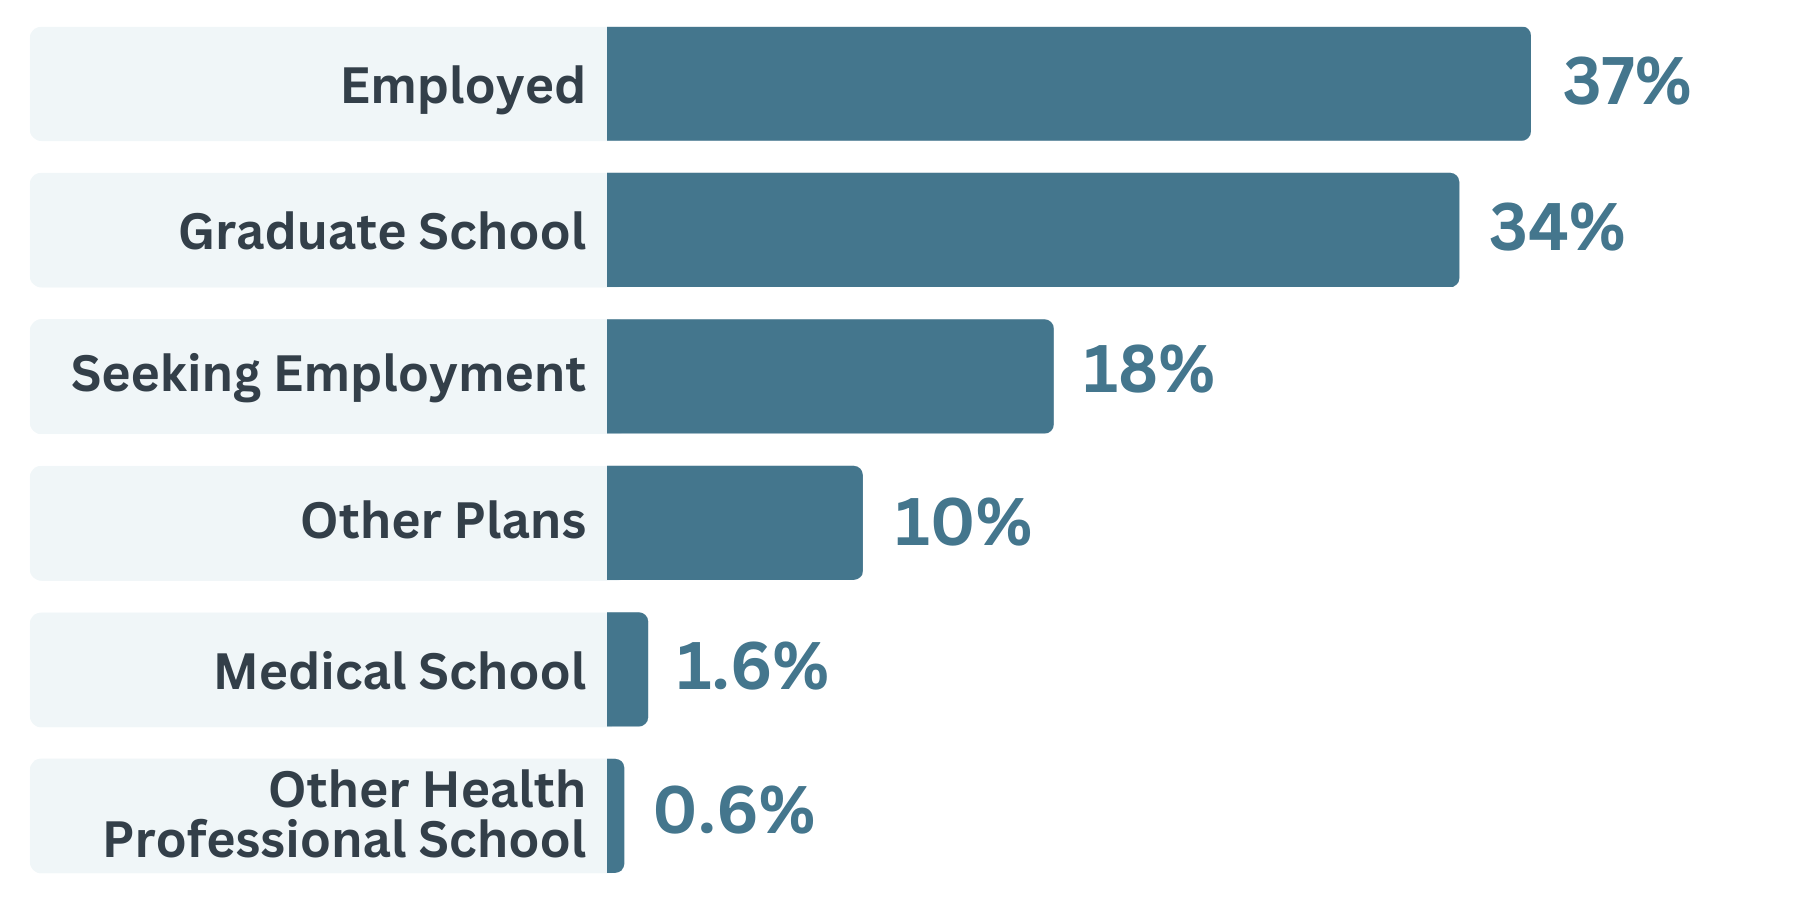 physics data: employed 37%, graduate school 34%, seeking employment 18%, other plans 10%, medical school 1.6%, other health professional school 0.6%